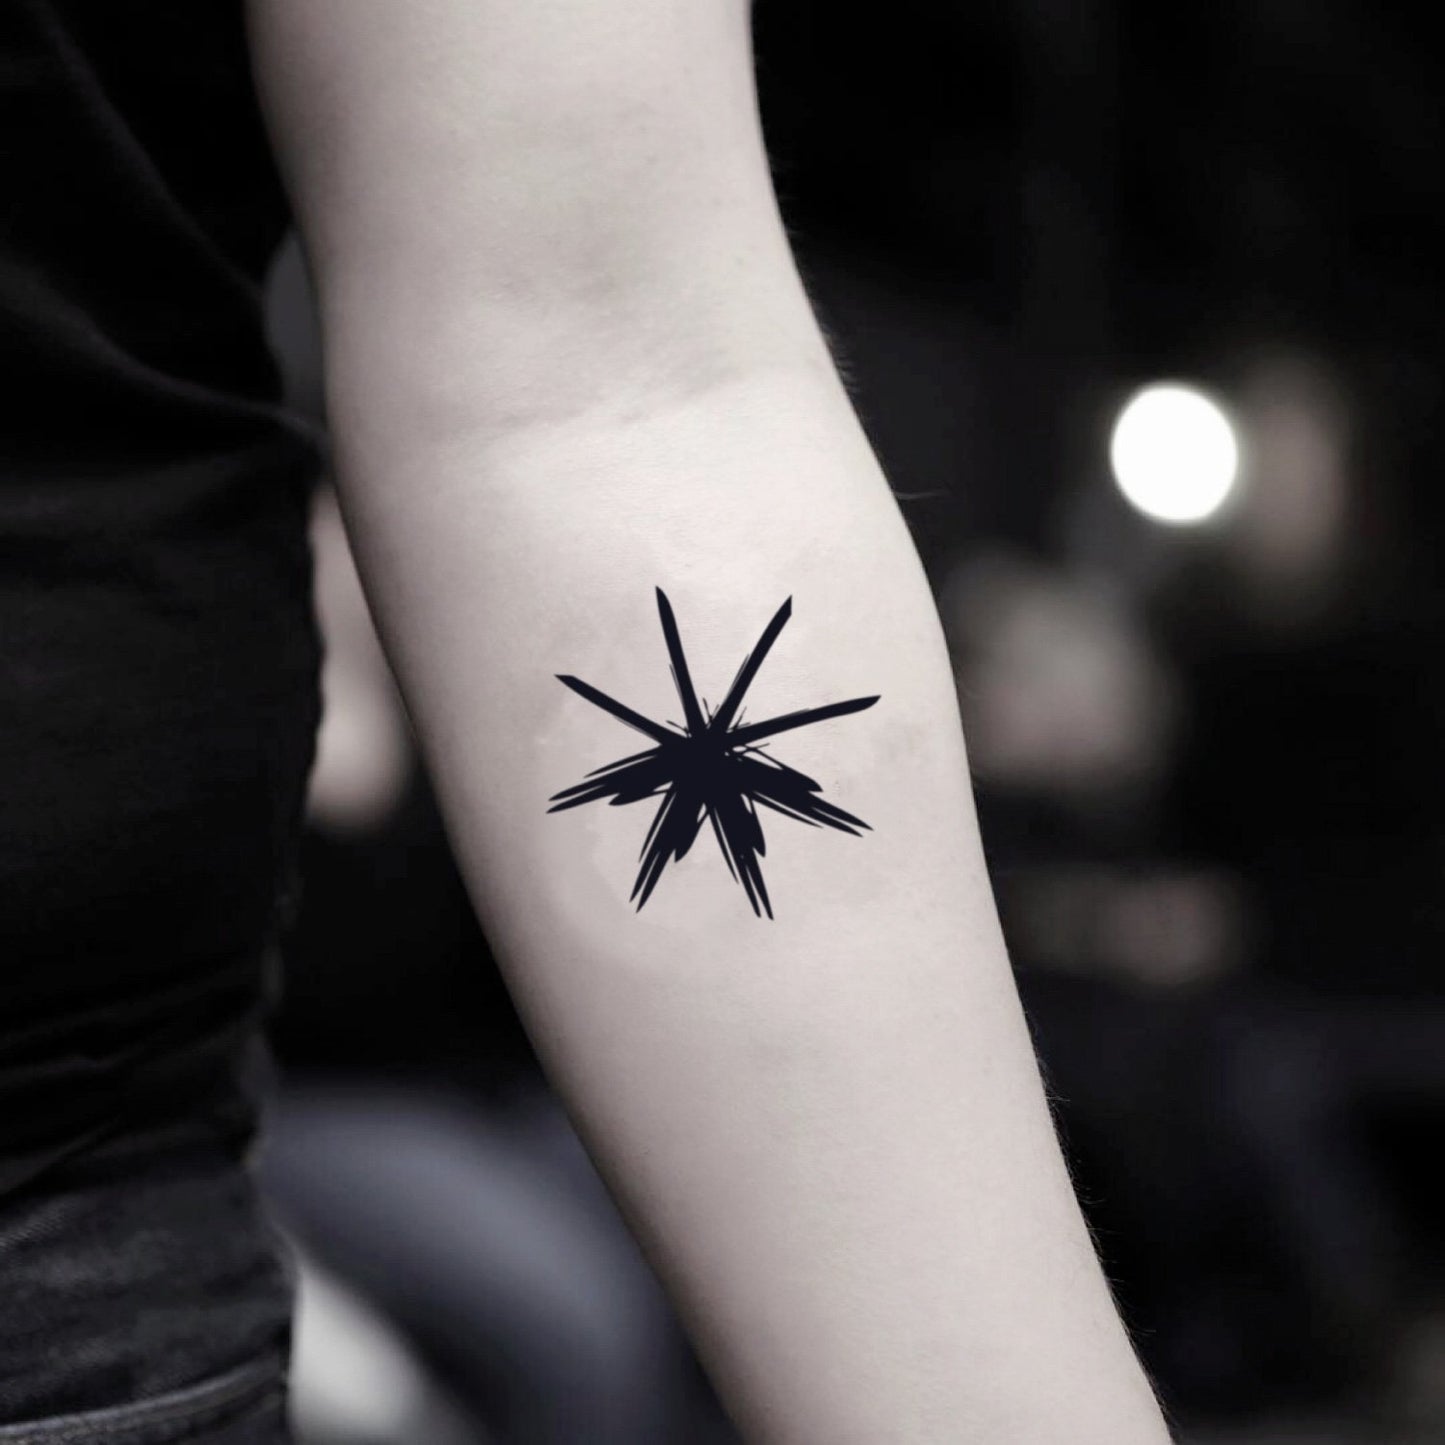 fake small asterisk geometric temporary tattoo sticker design idea on inner arm